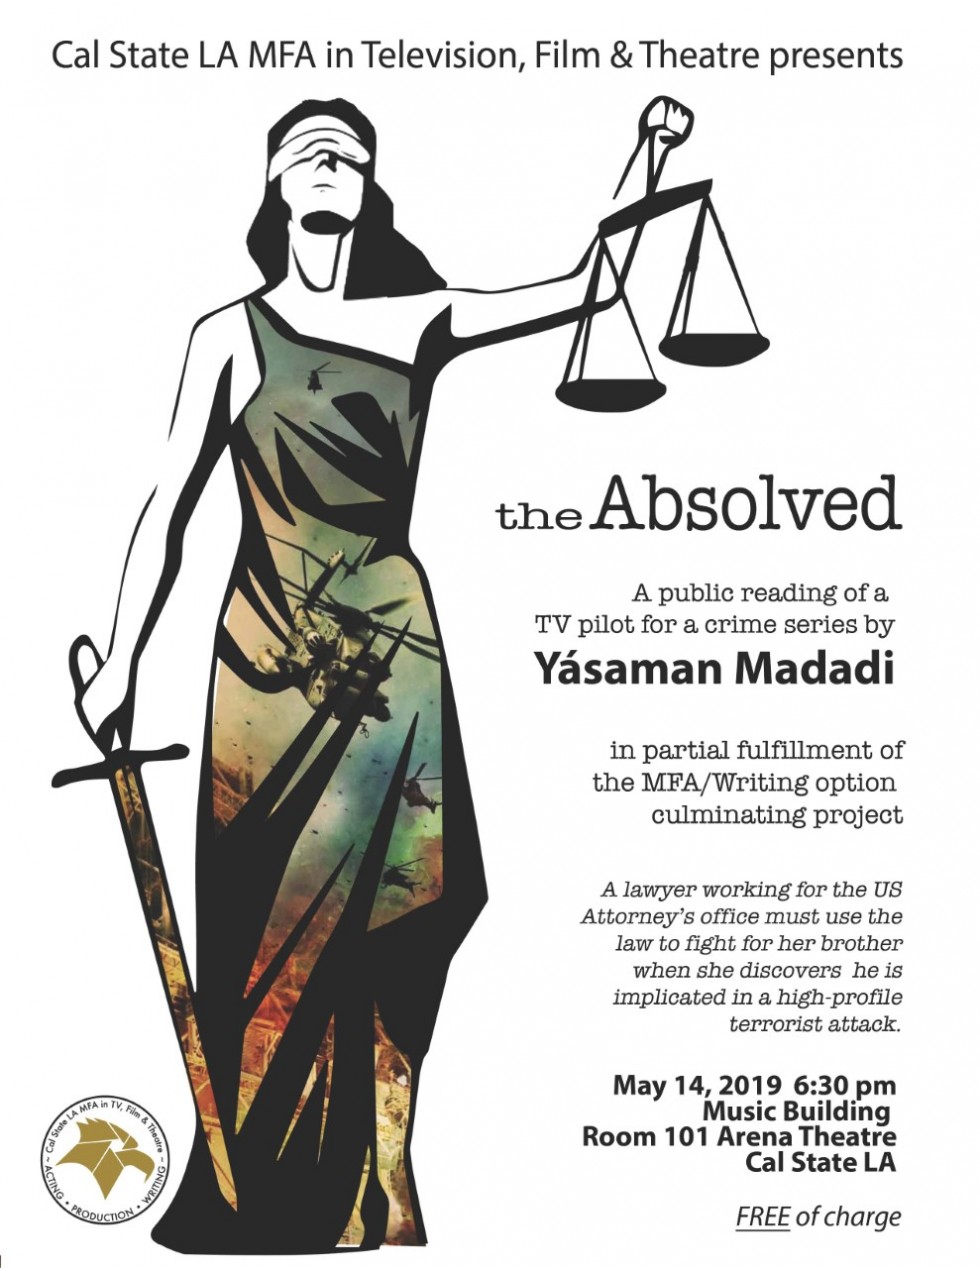 The Absolved by Yasaman Madadi